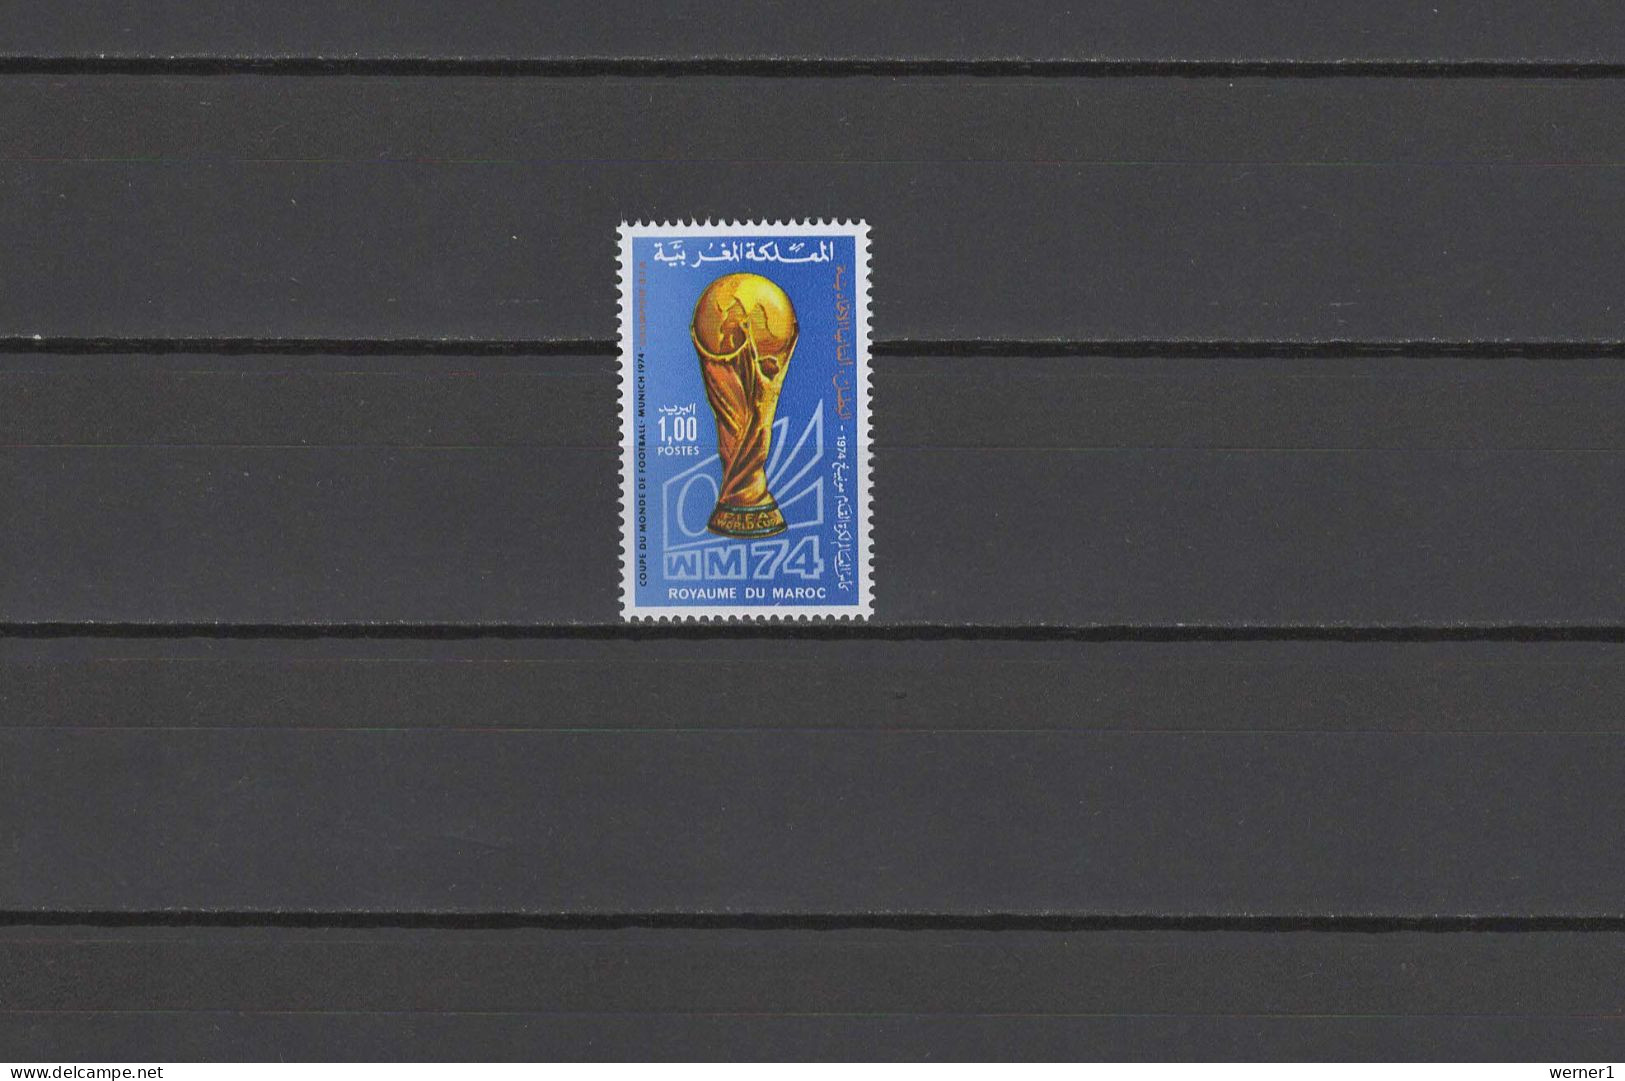 Morocco 1974 Football Soccer World Cup Stamp With Golden Winners Overprint MNH -scarce- - 1974 – Westdeutschland